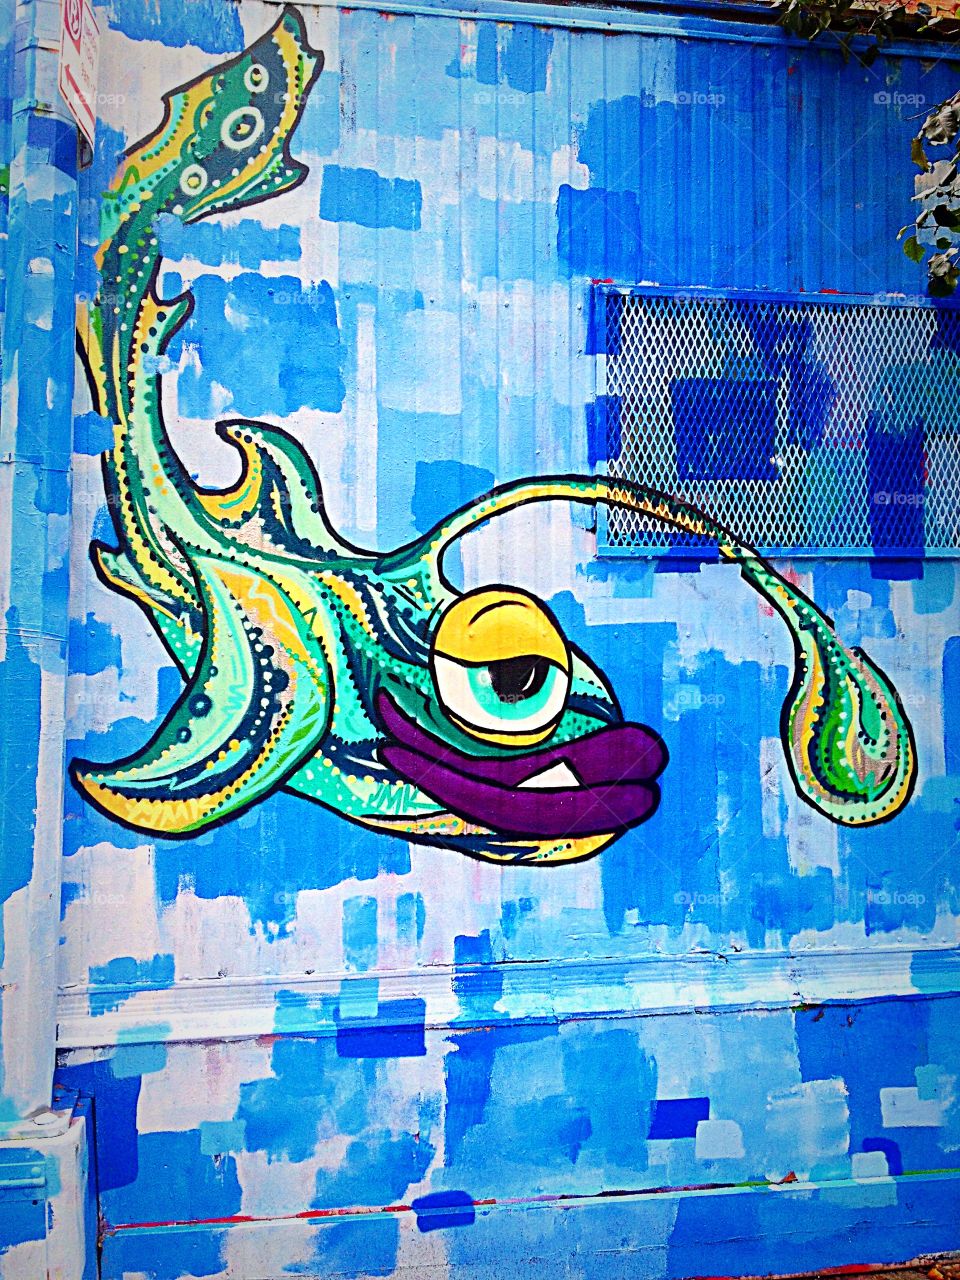 Anglerfish street art